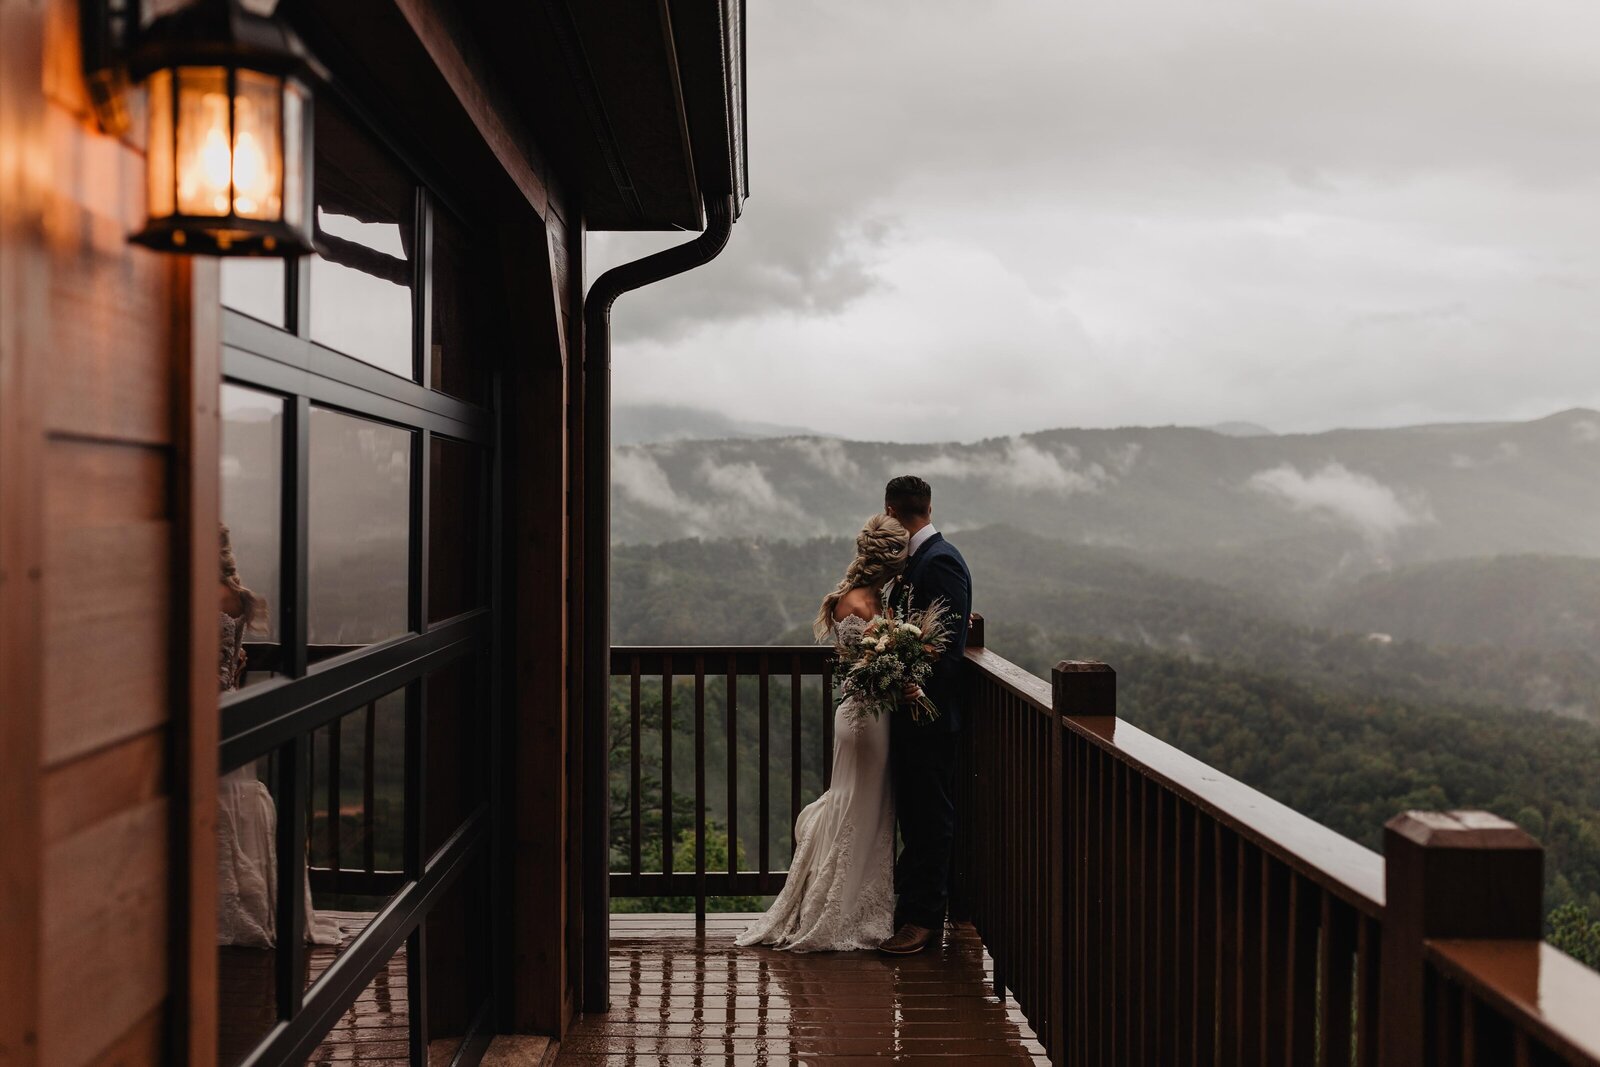 The Magnolia Venue | Smoky Mountain Wedding Photographer